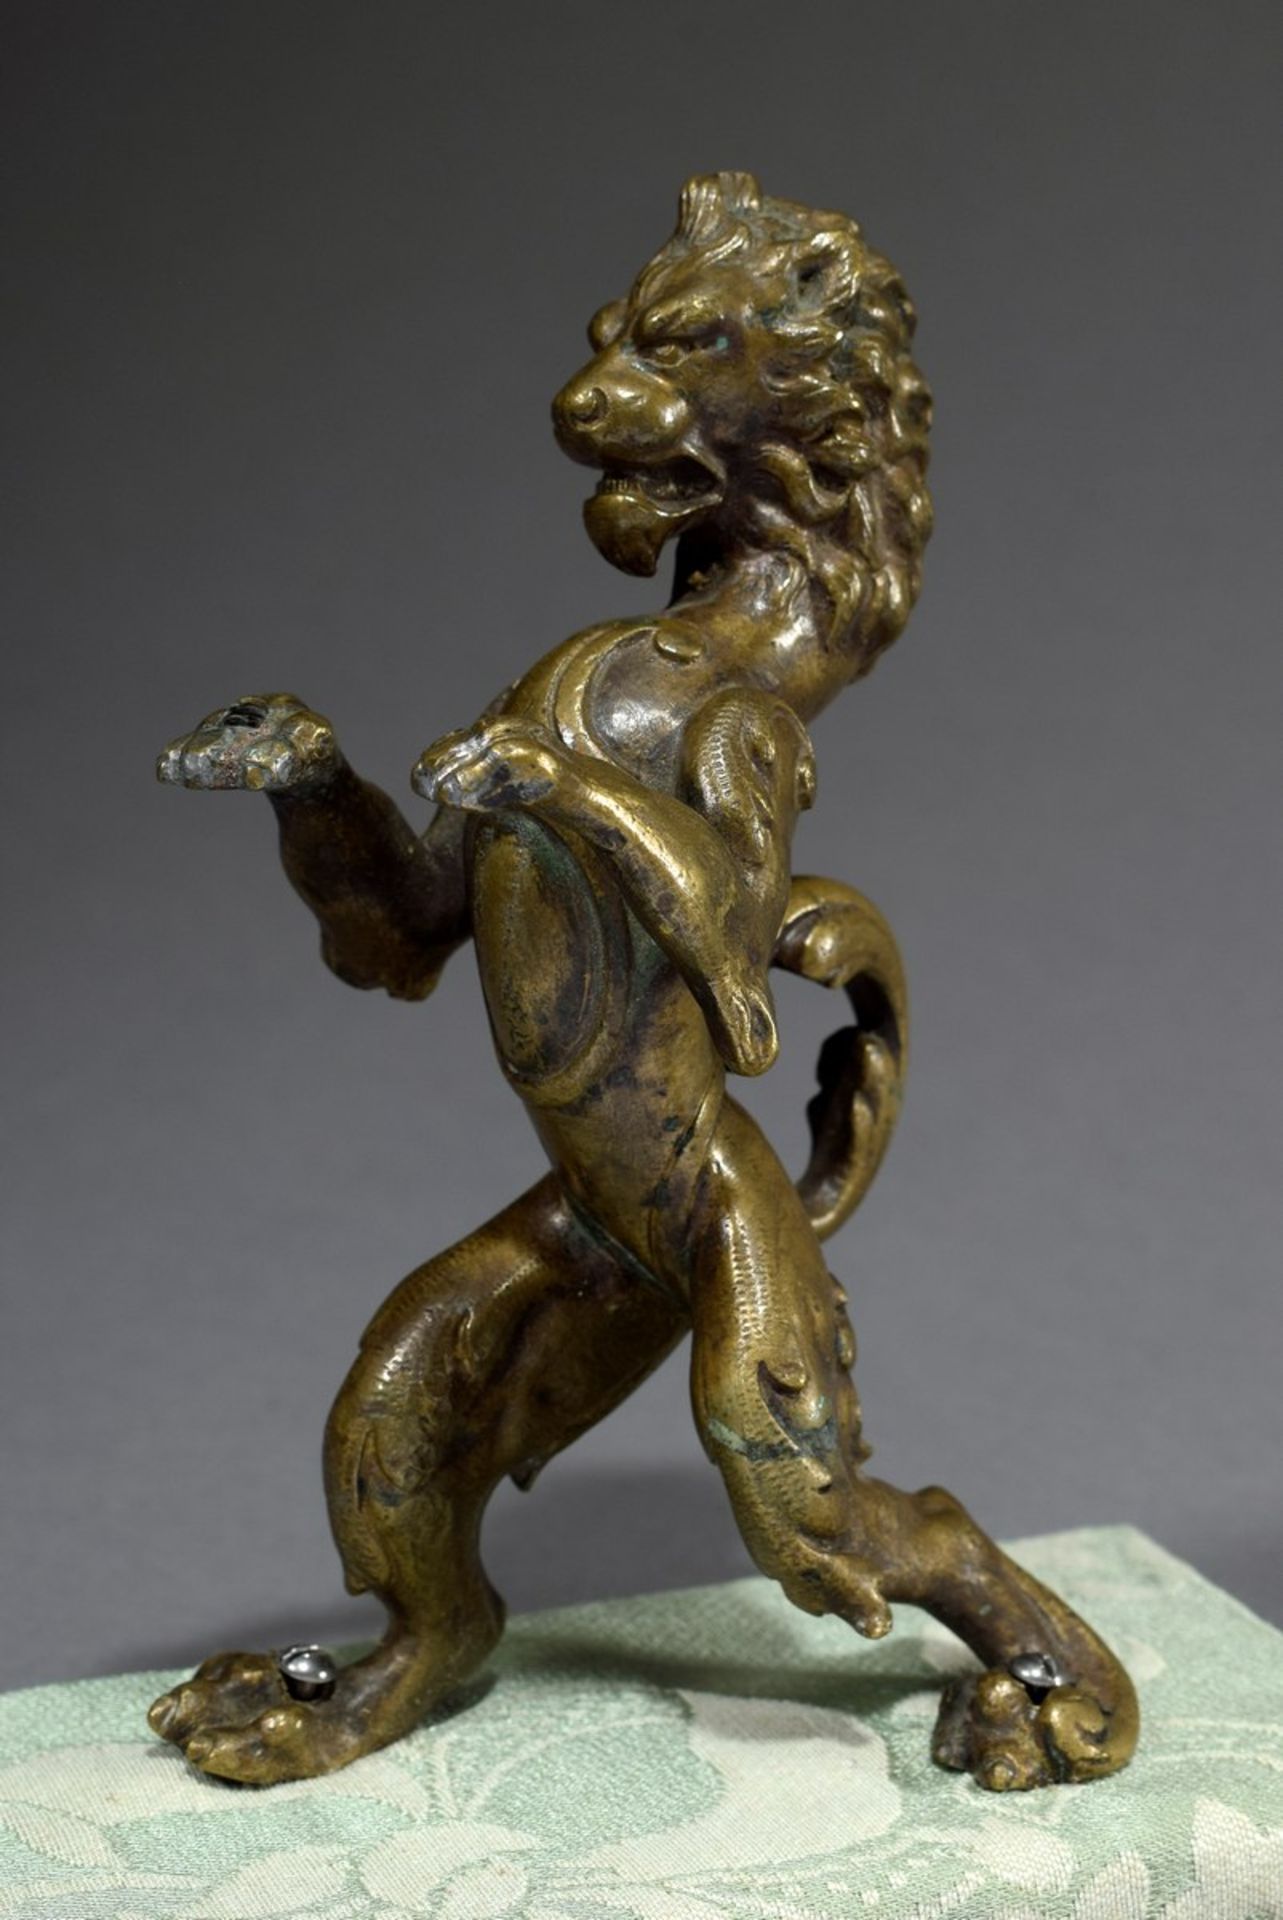 Skulptur „Steigender Löwe“, Gelbguss, auf Plinthe, Ende 19.Jh., H. 13,5/15cm, ehem. Slg. Walter